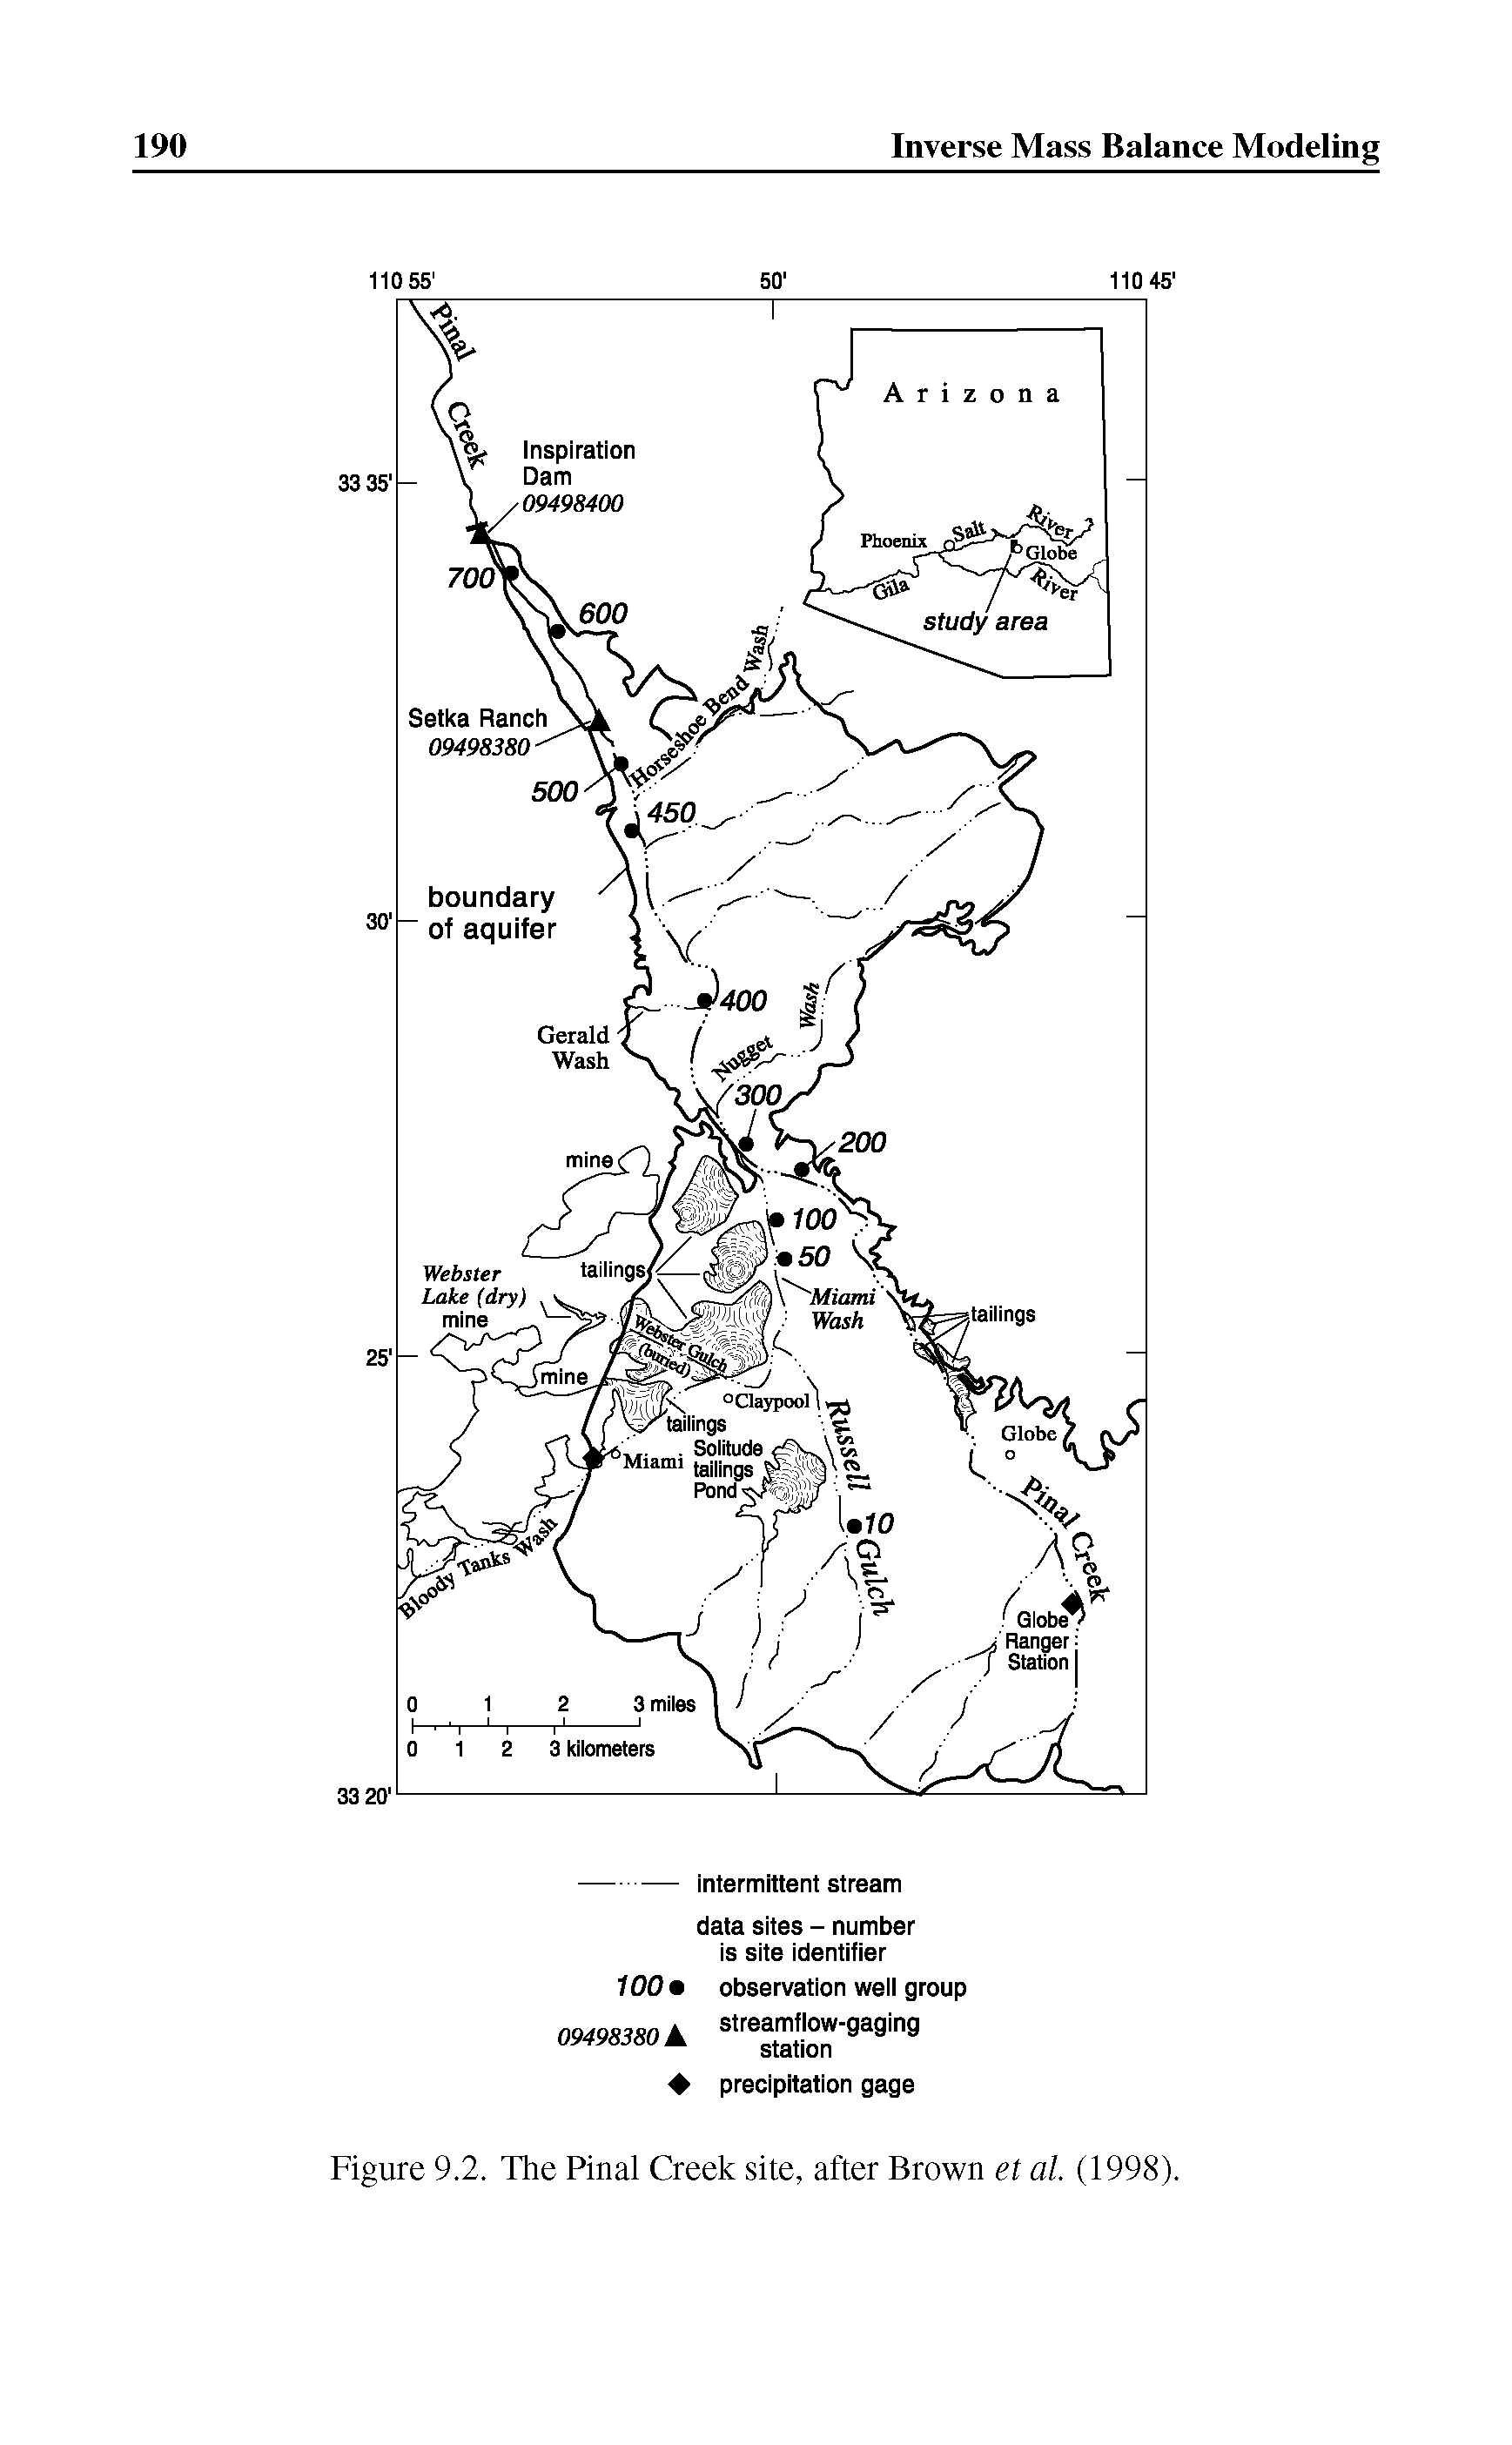 Figure 9.2. The Pinal Creek site, after Brown et al. (1998).